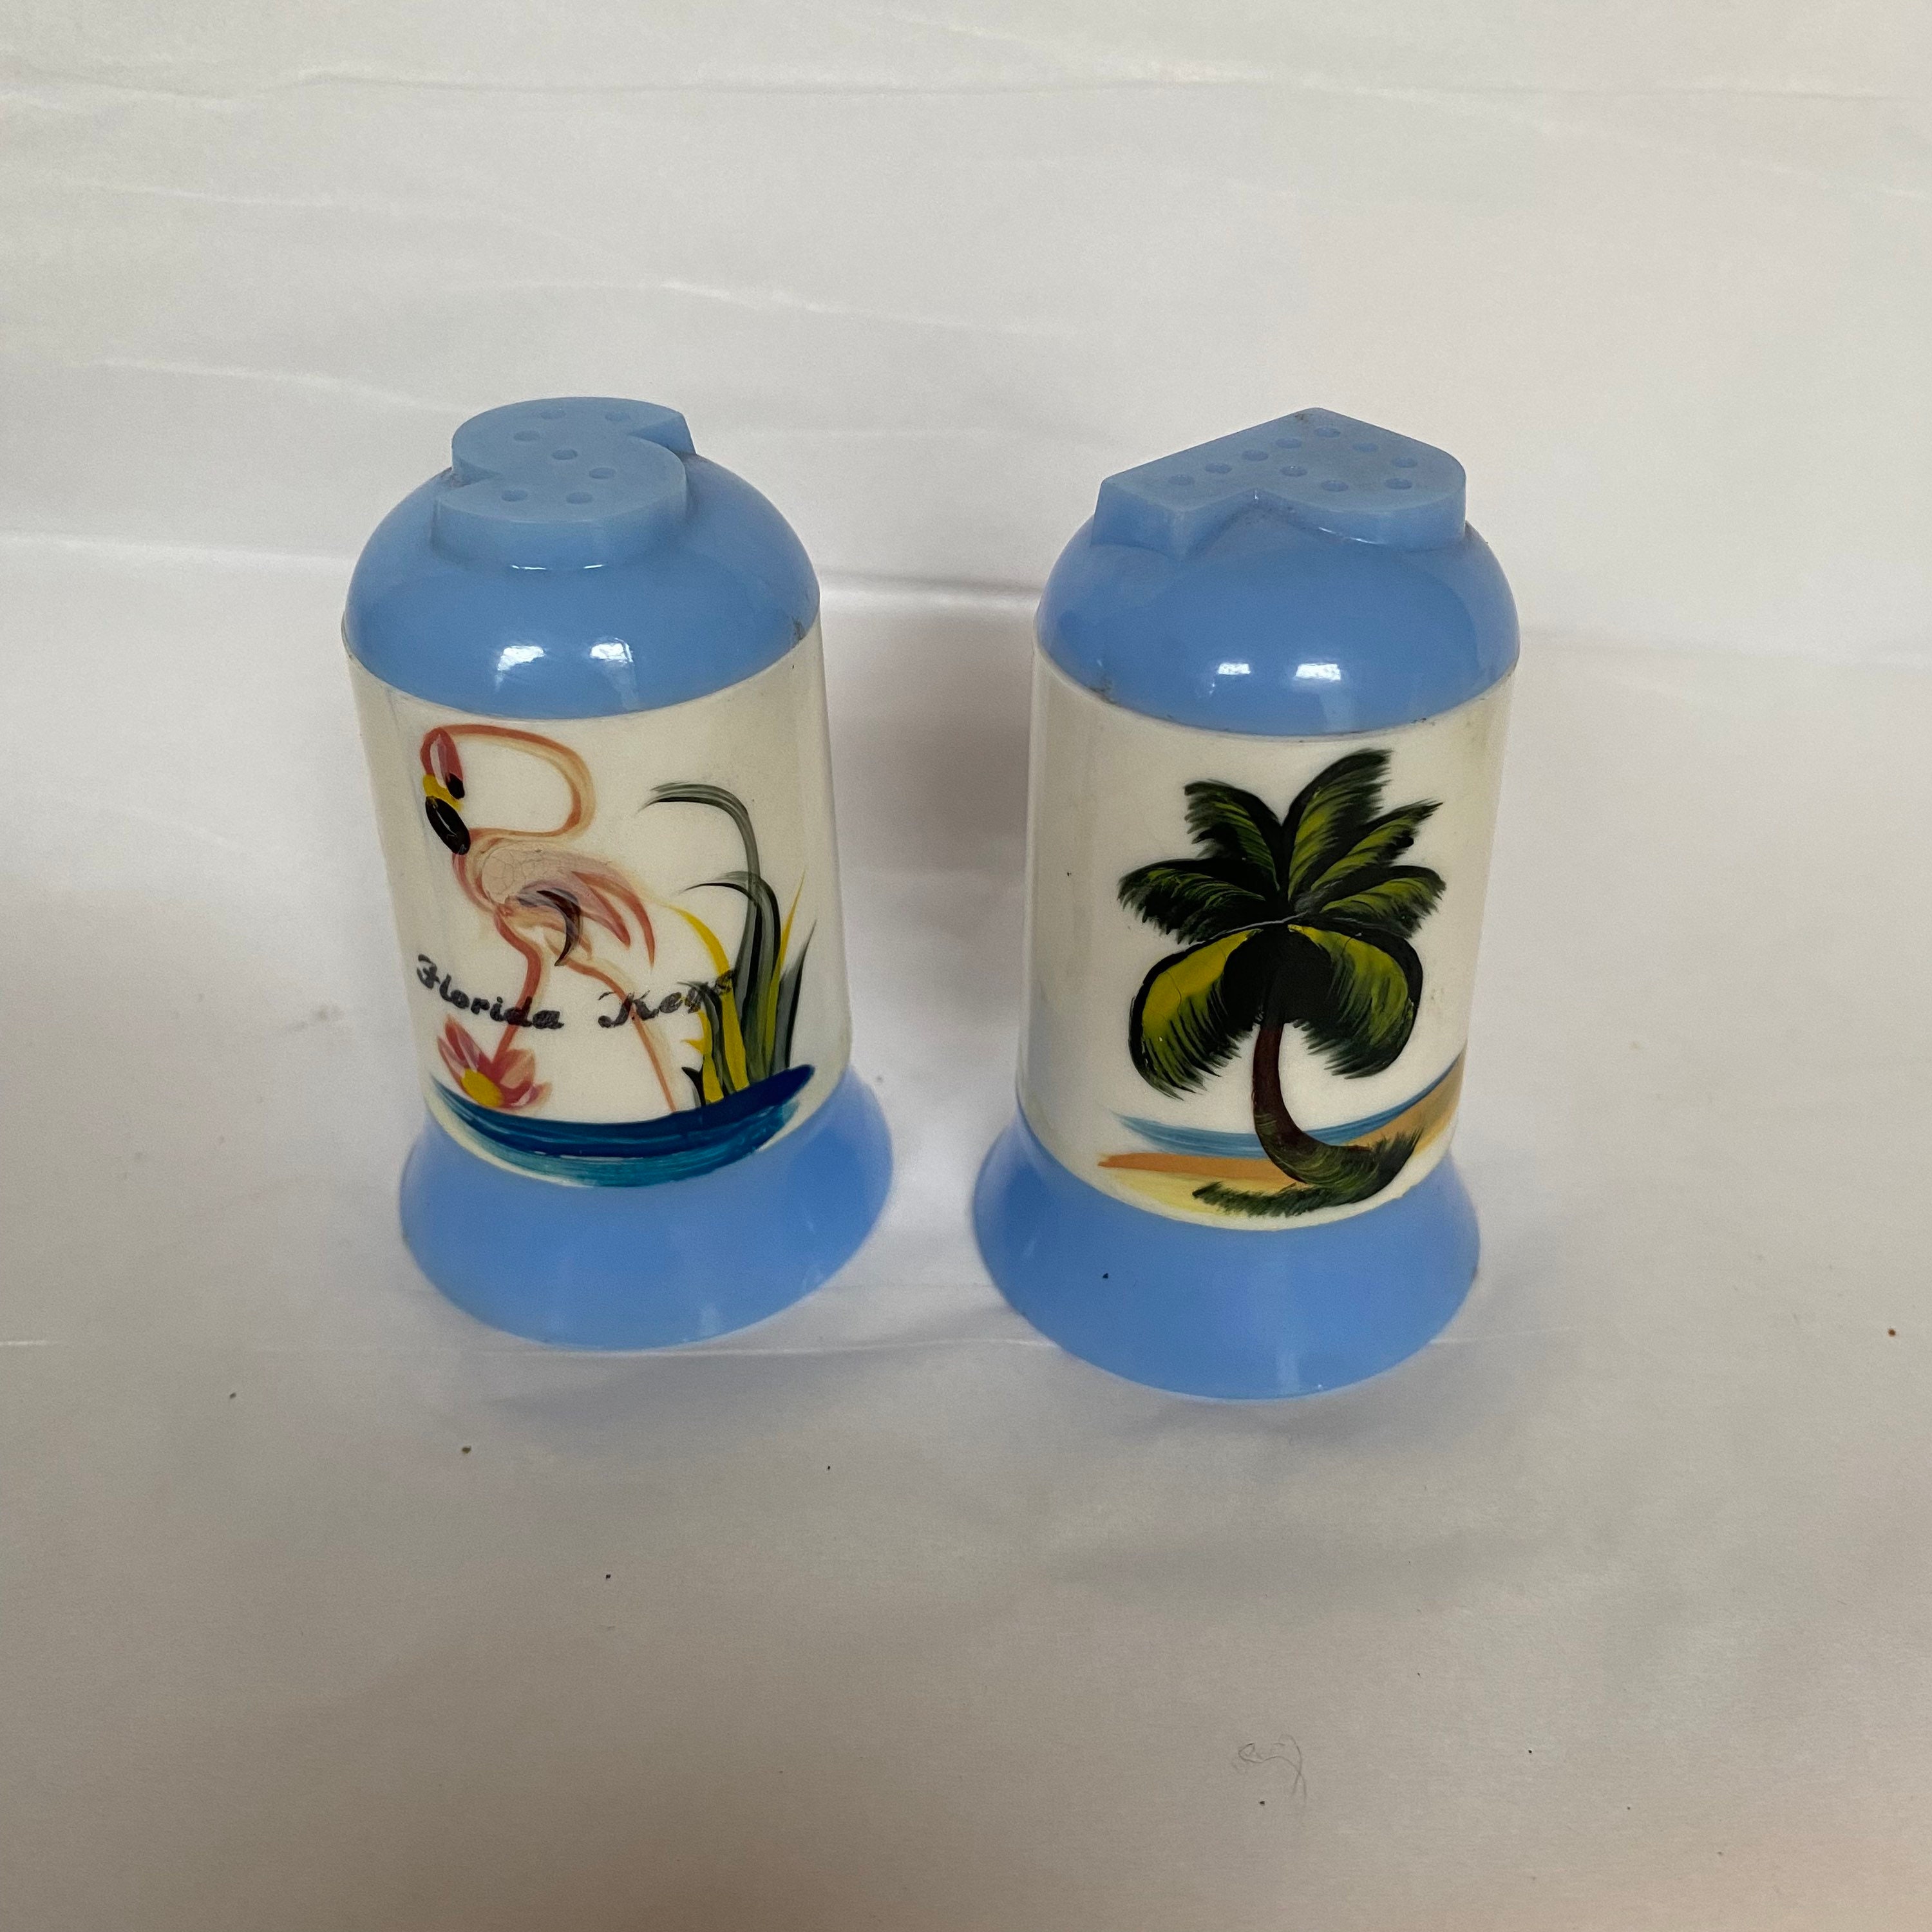 Vintage Plastic Turquoise Salt and Pepper Shaker Set by Carvanite